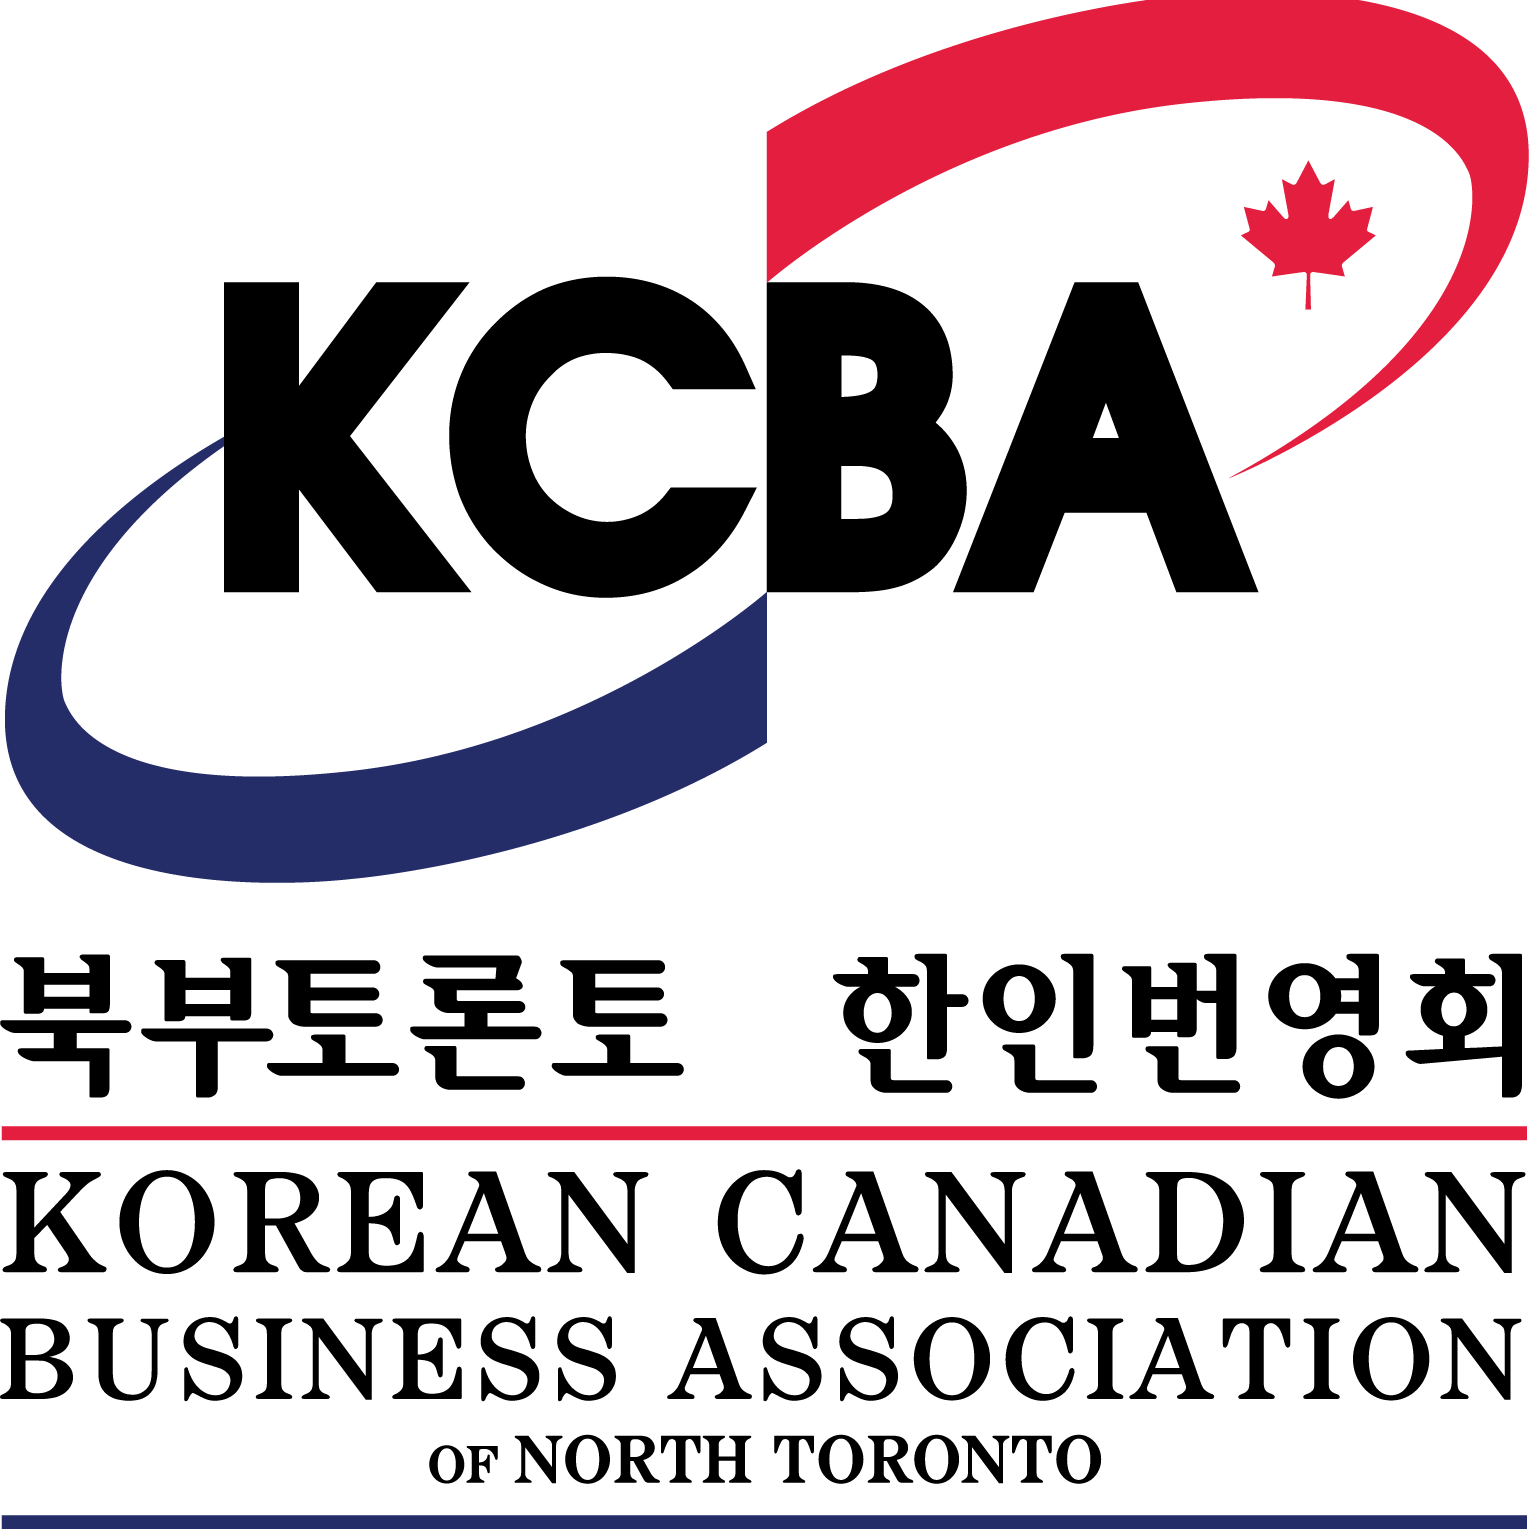 Korean Speaking Organization in Canada - Korean Canadian Business Association